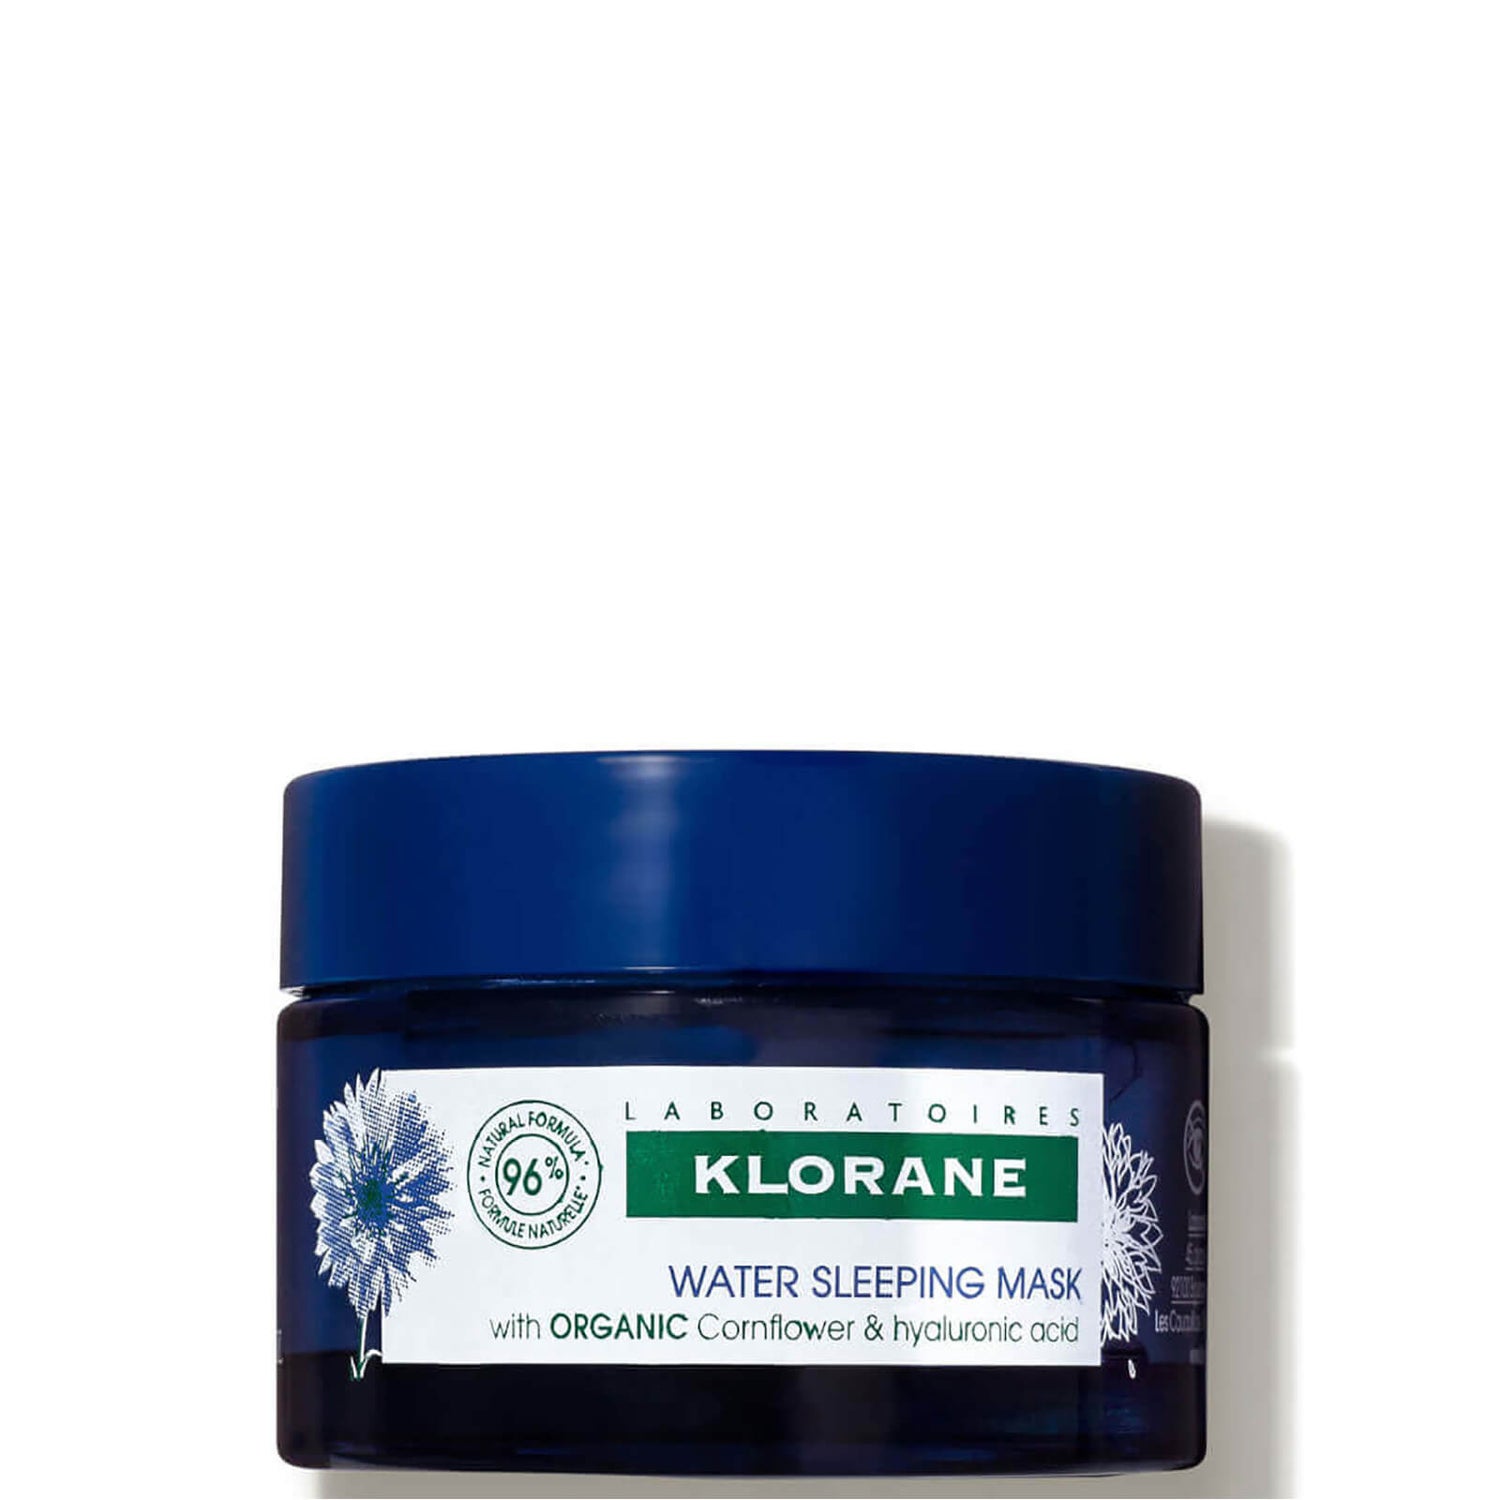 Klorane Organic Cornflower Skincare For Dehydrated Skin Review